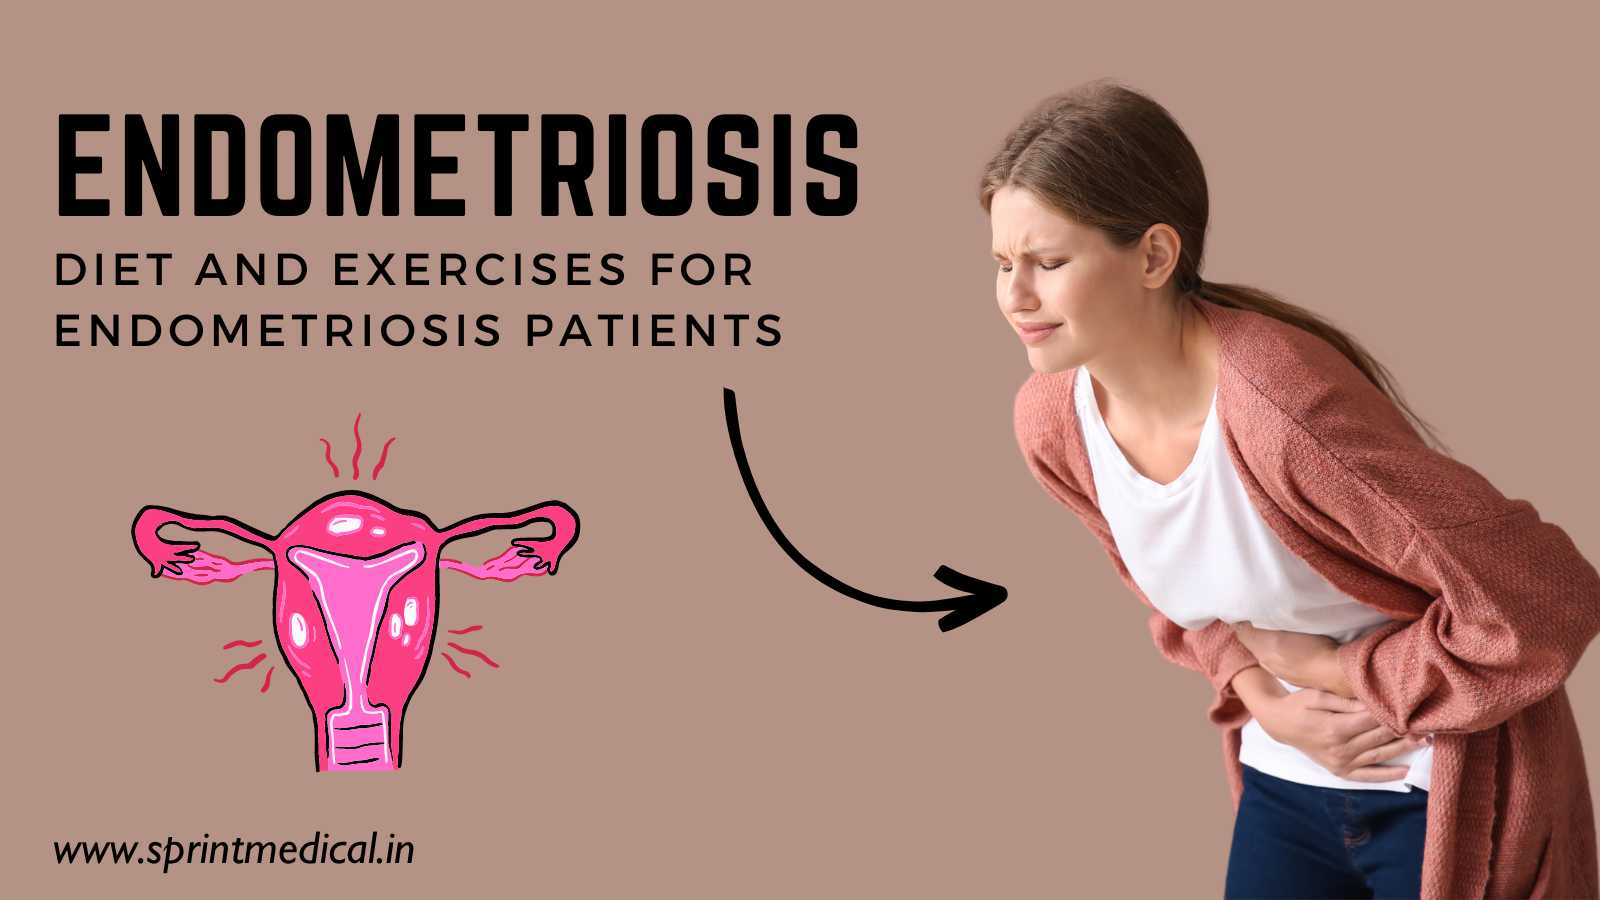 Endometriosis Diet and exercises for endometriosis patients